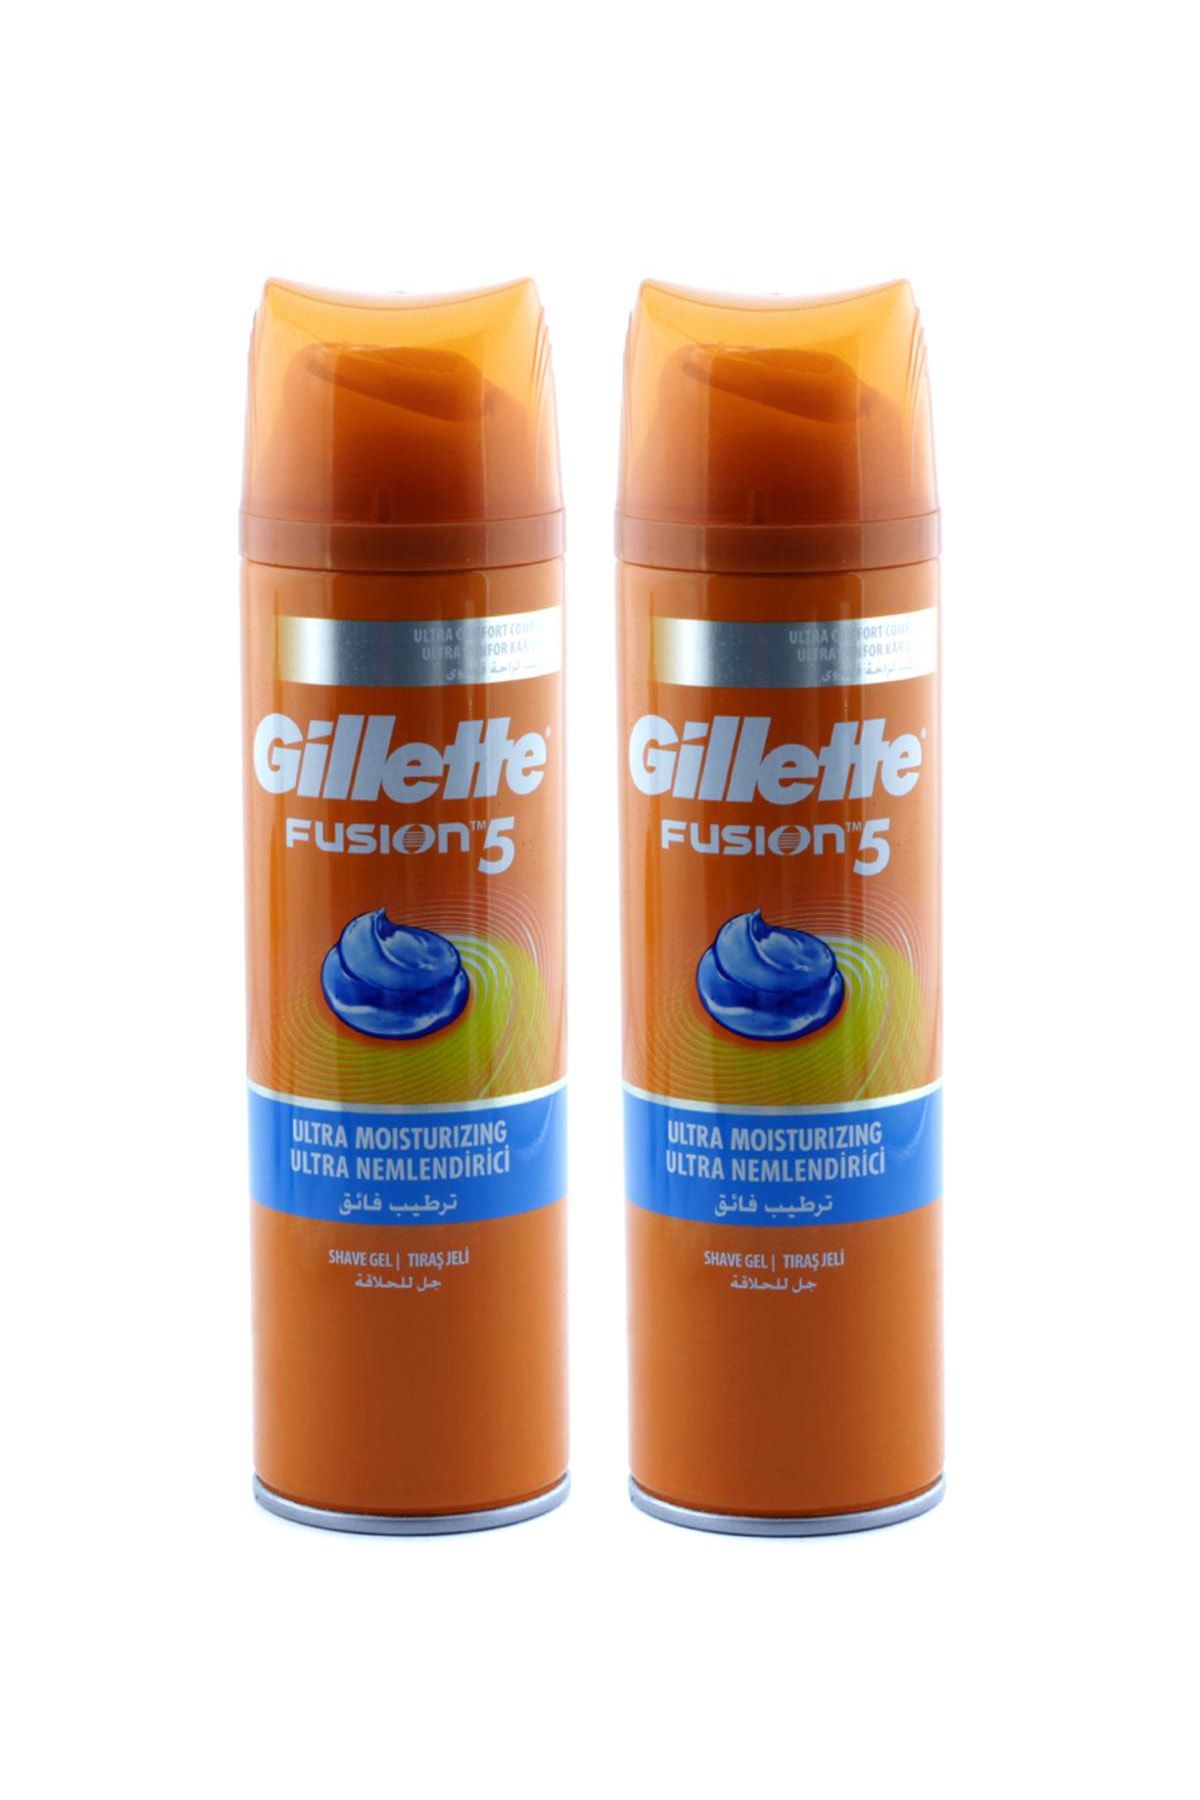 Gillette Ultra Nemlendirici Tıraş Jeli Fusion 5 200 ml x 2